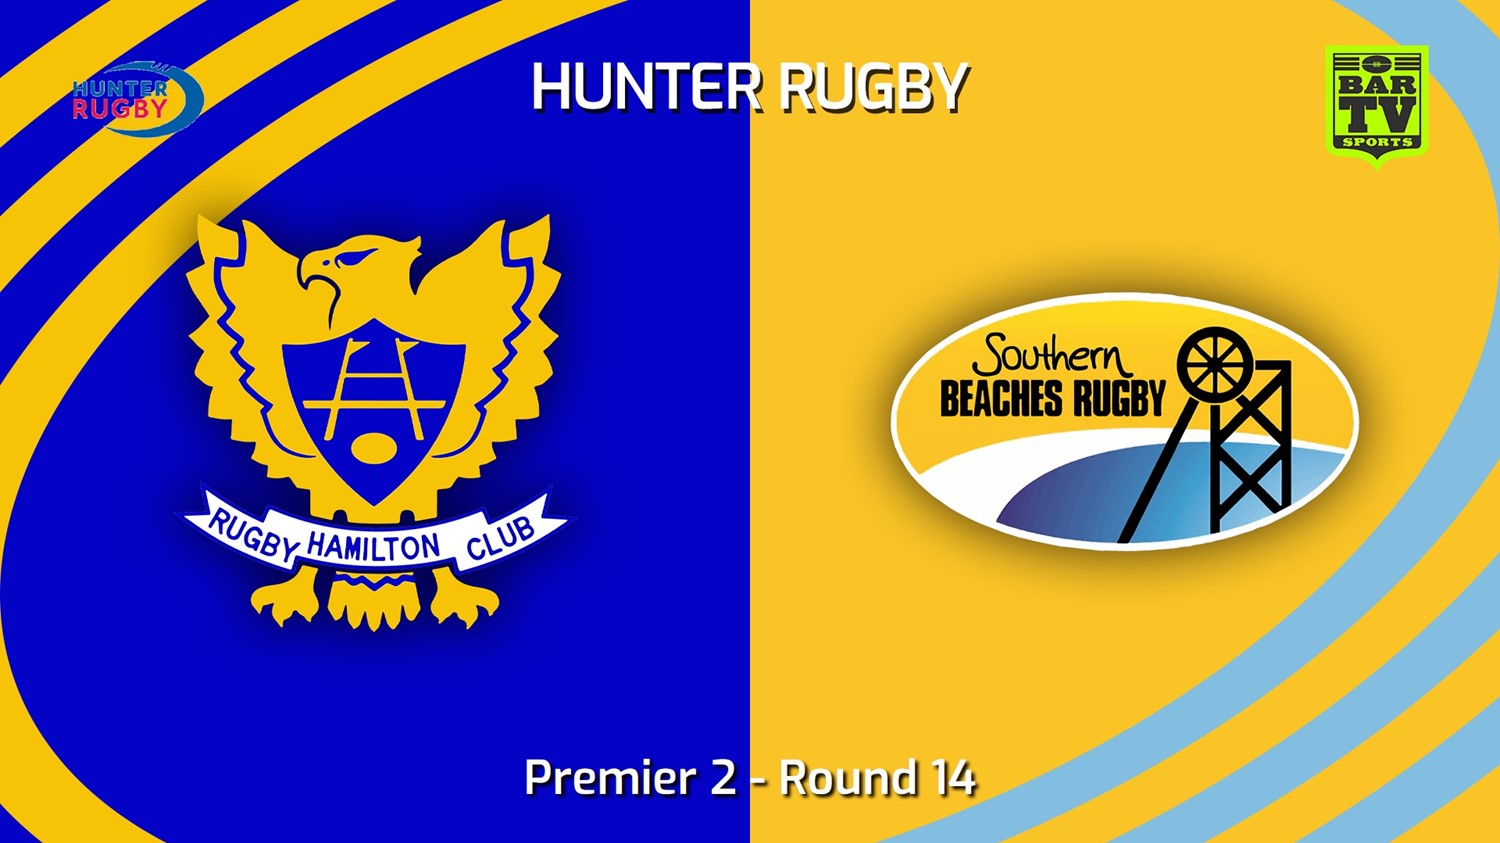 230722-Hunter Rugby Round 14 - Premier 2 - Hamilton Hawks v Southern Beaches Slate Image